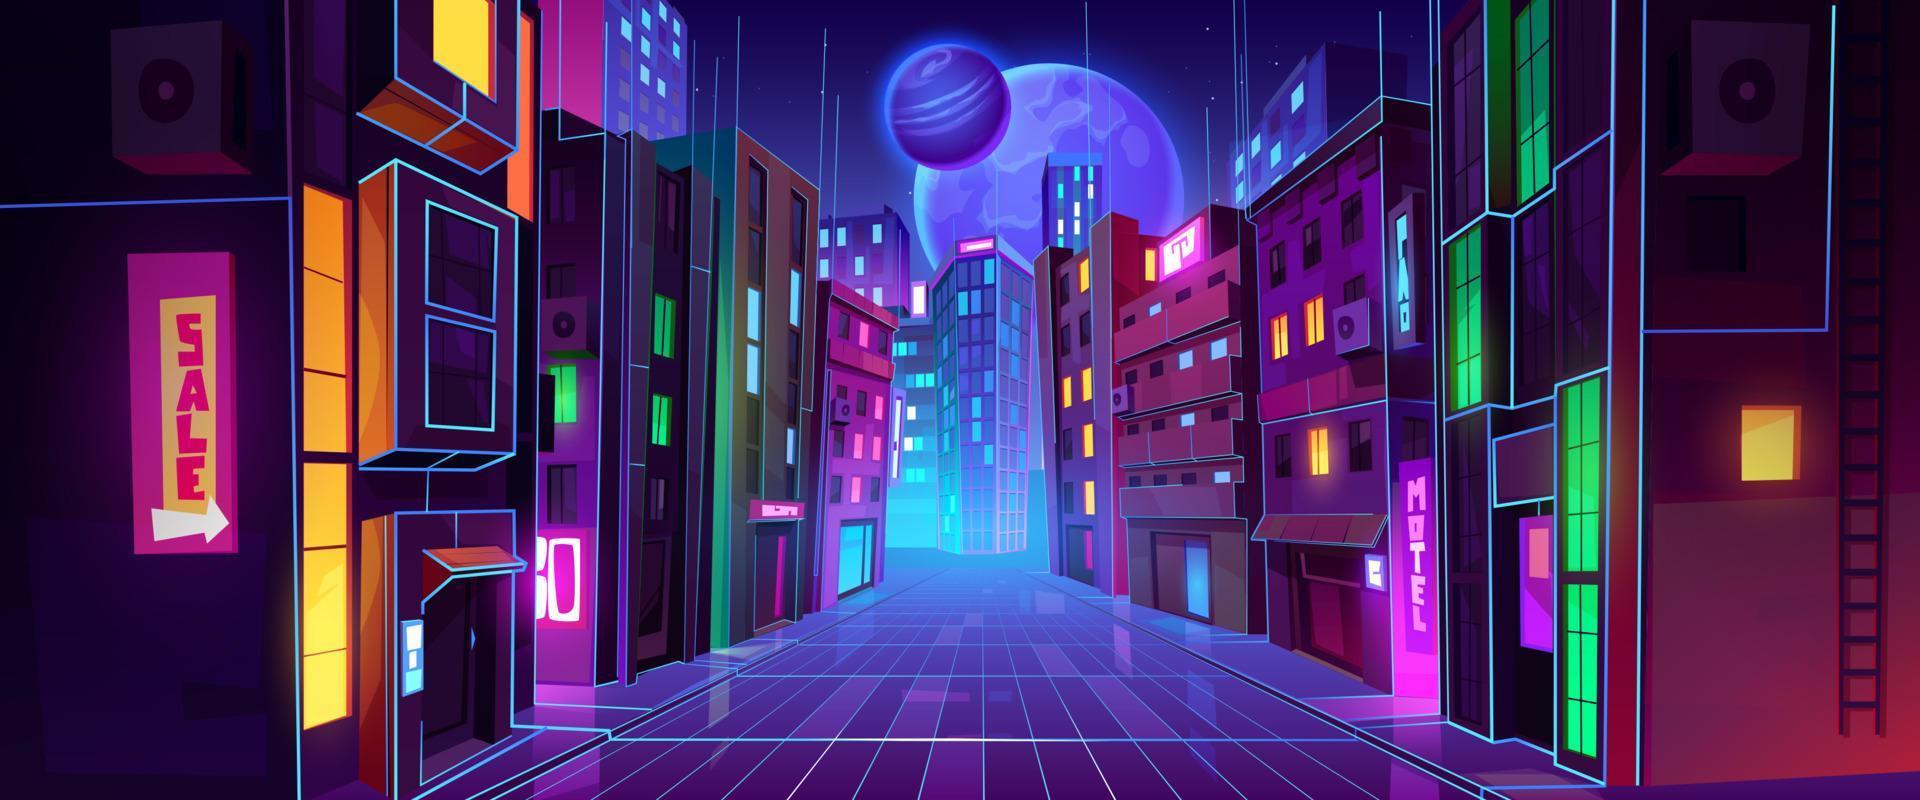 Futuristic metaverse city background vector